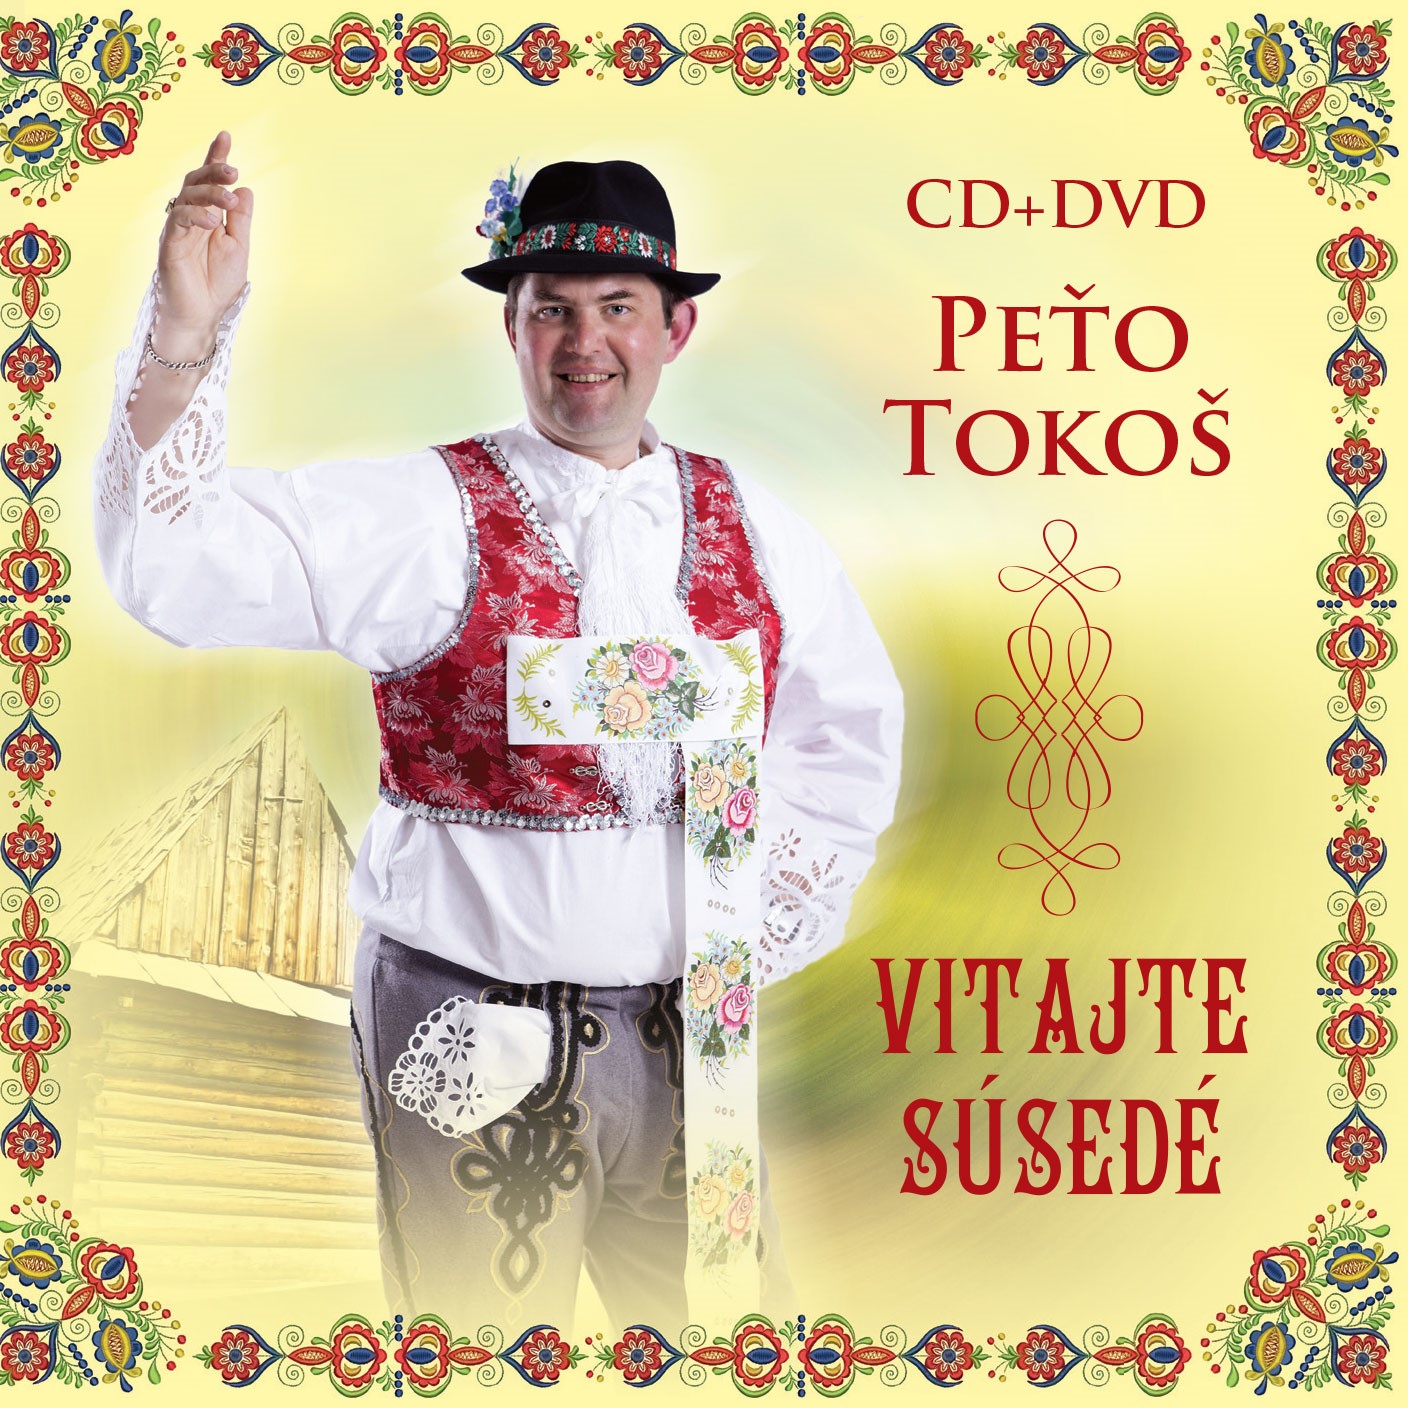 Peo Toko - Vitajte ssed (cd + dvd)